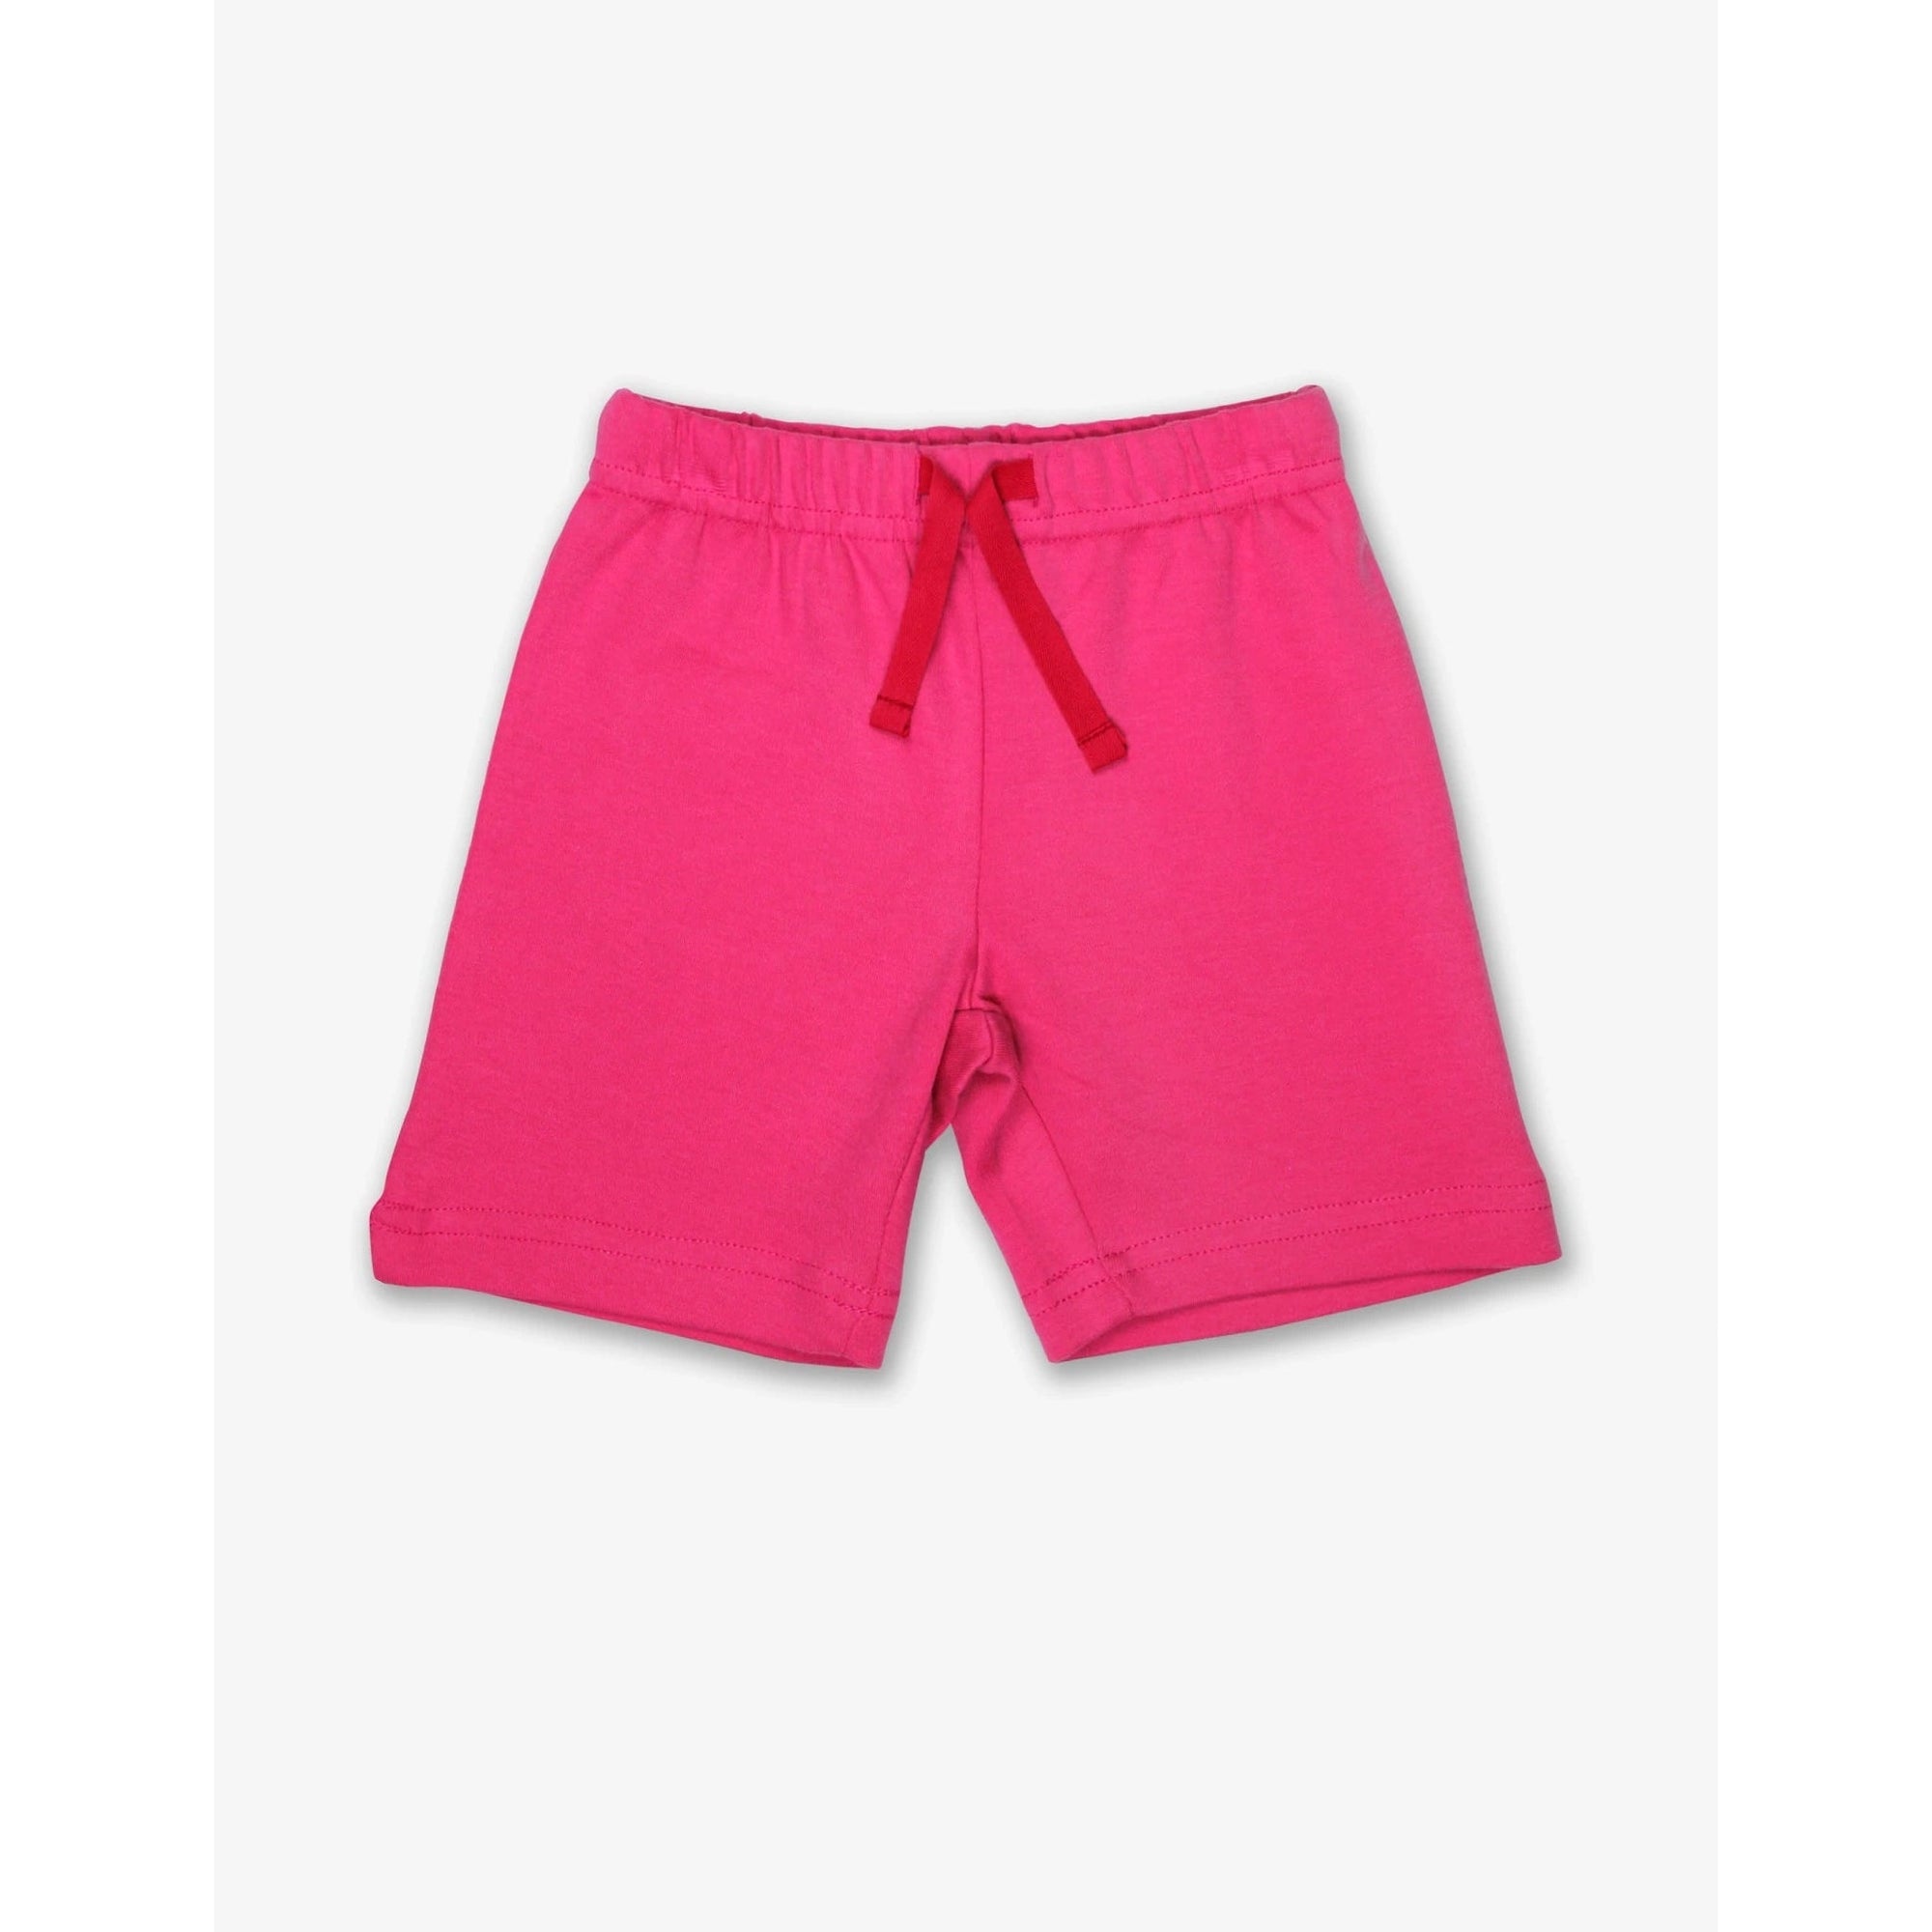 Pink Shorts - 1 Left Size 6-12 months-Toby Tiger-Modern Rascals